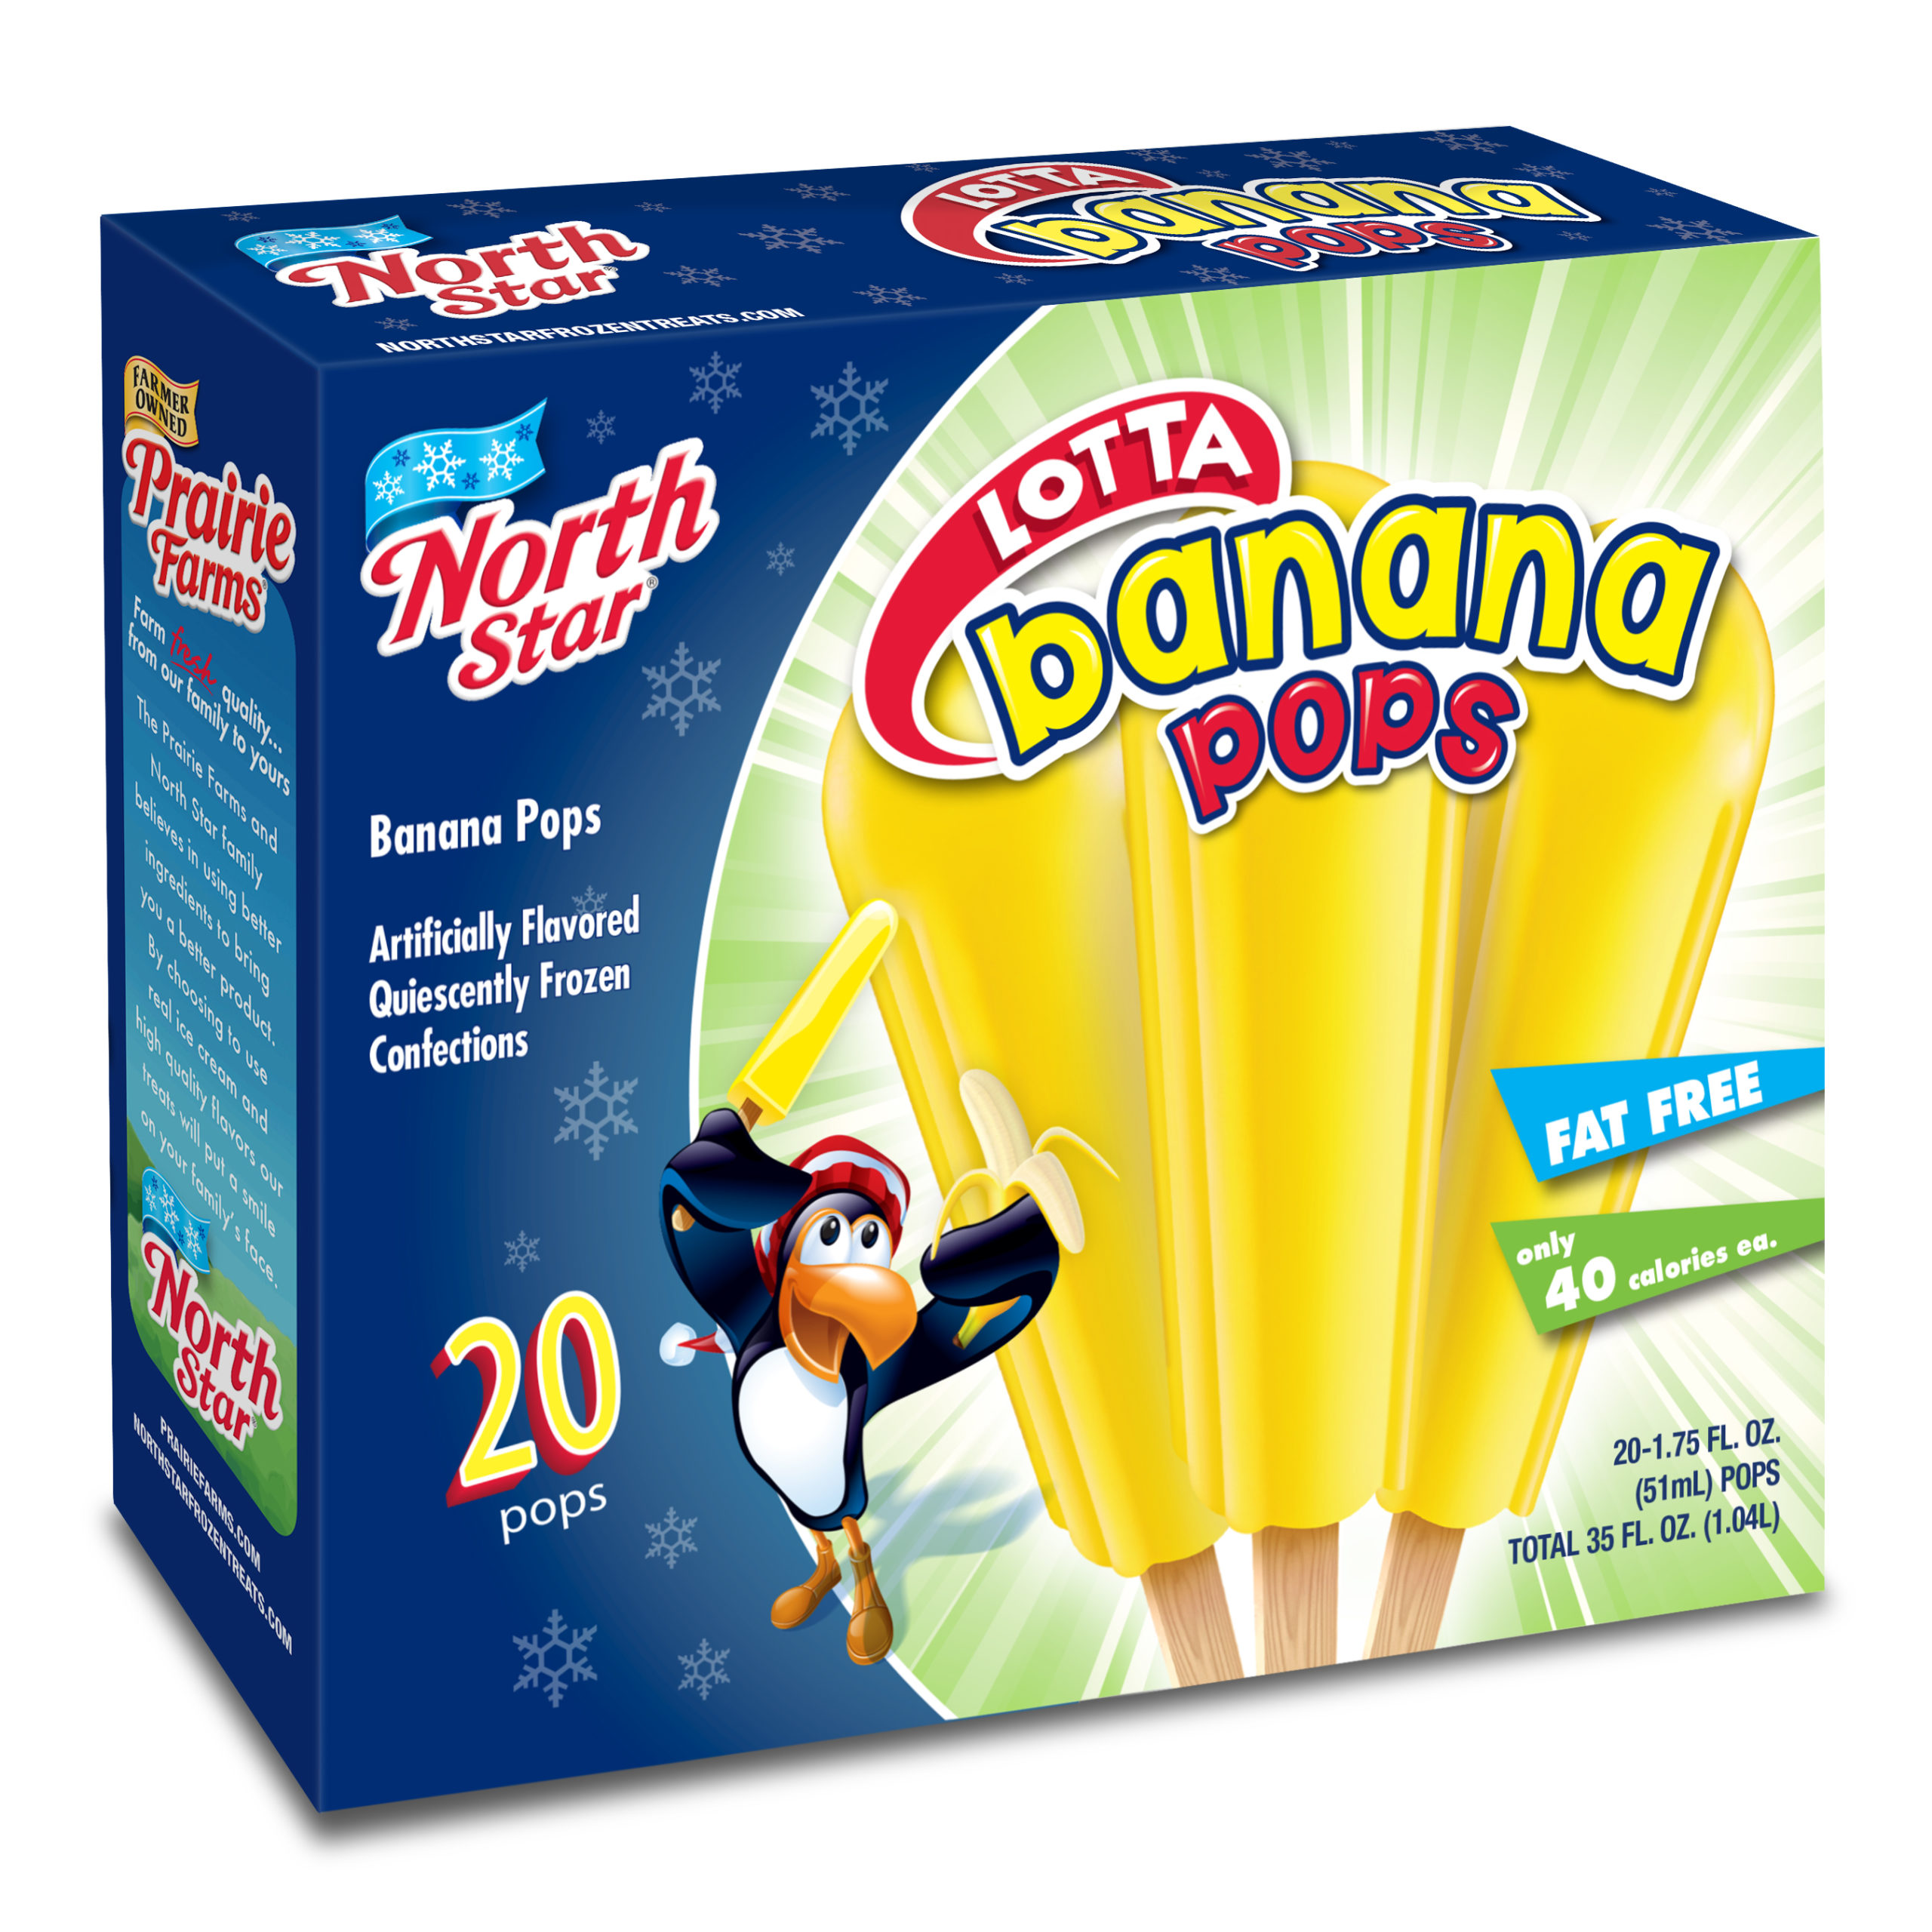 Lotta Banana Pops, 20ct